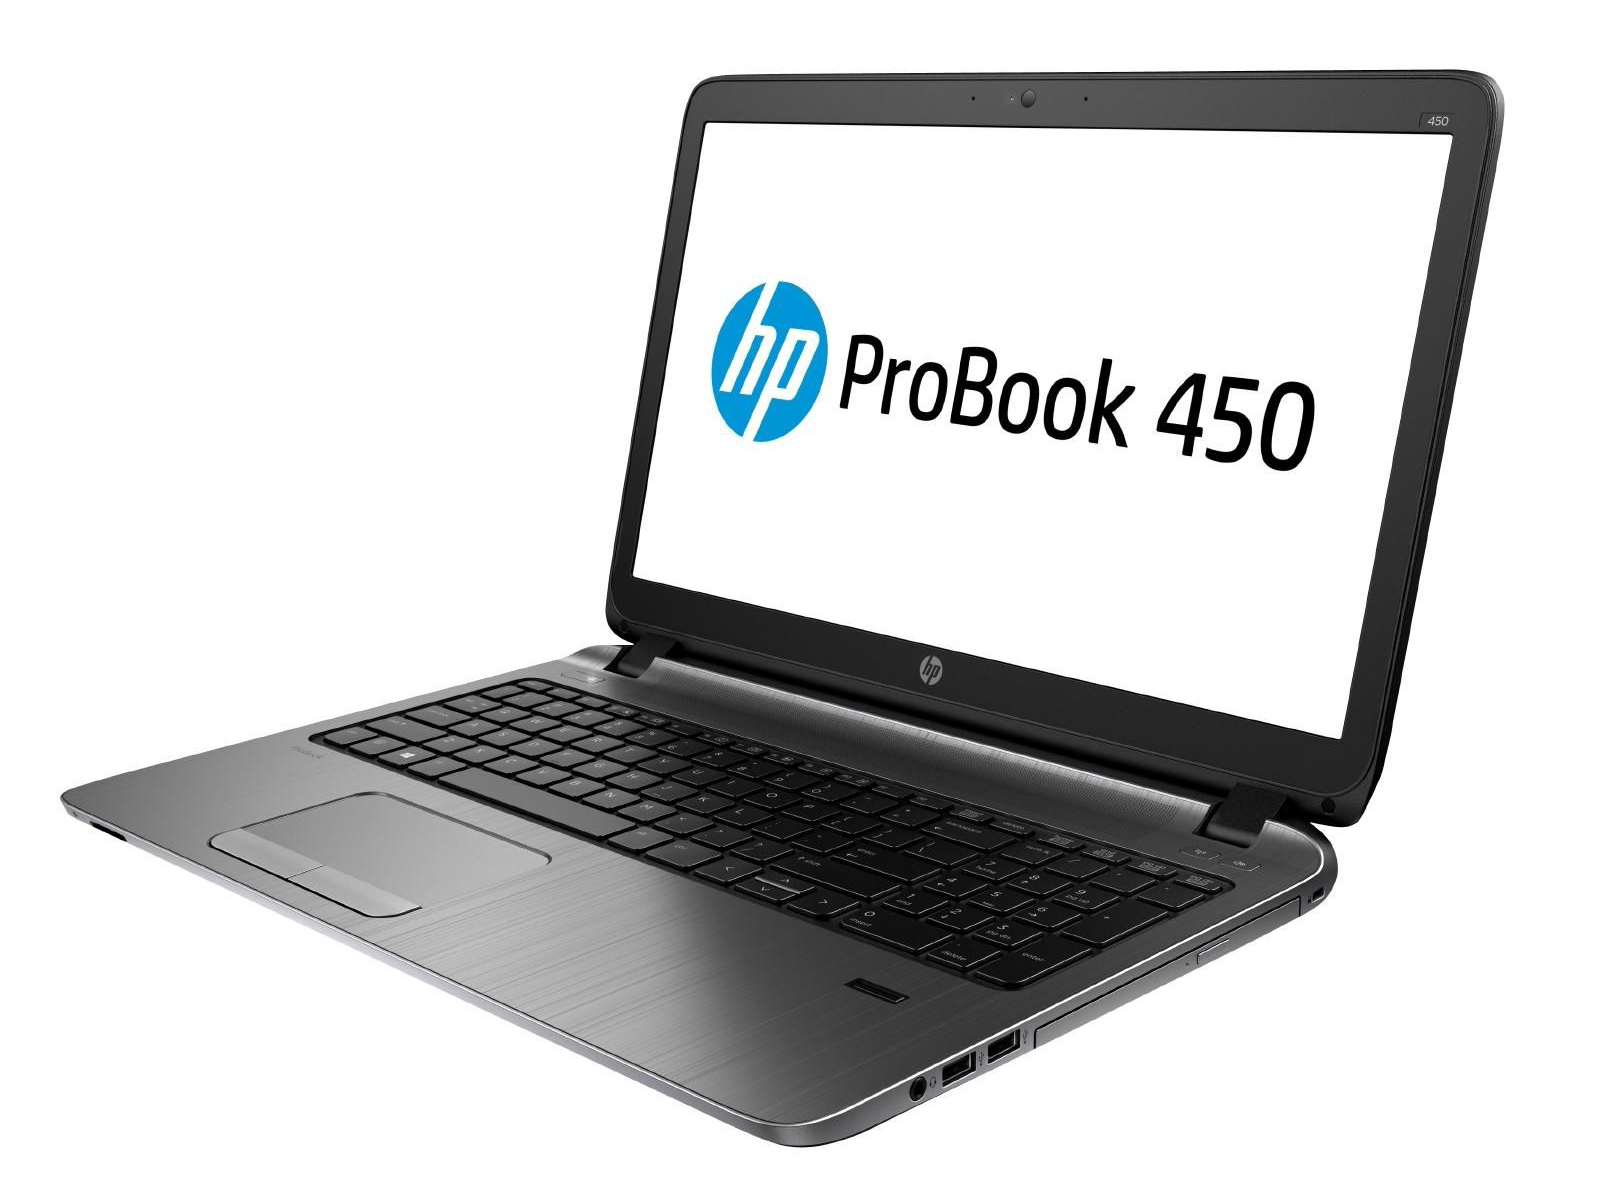 HP ProBook 450 G2 Intel Core i3, 4GB, 500GB, Windows 10